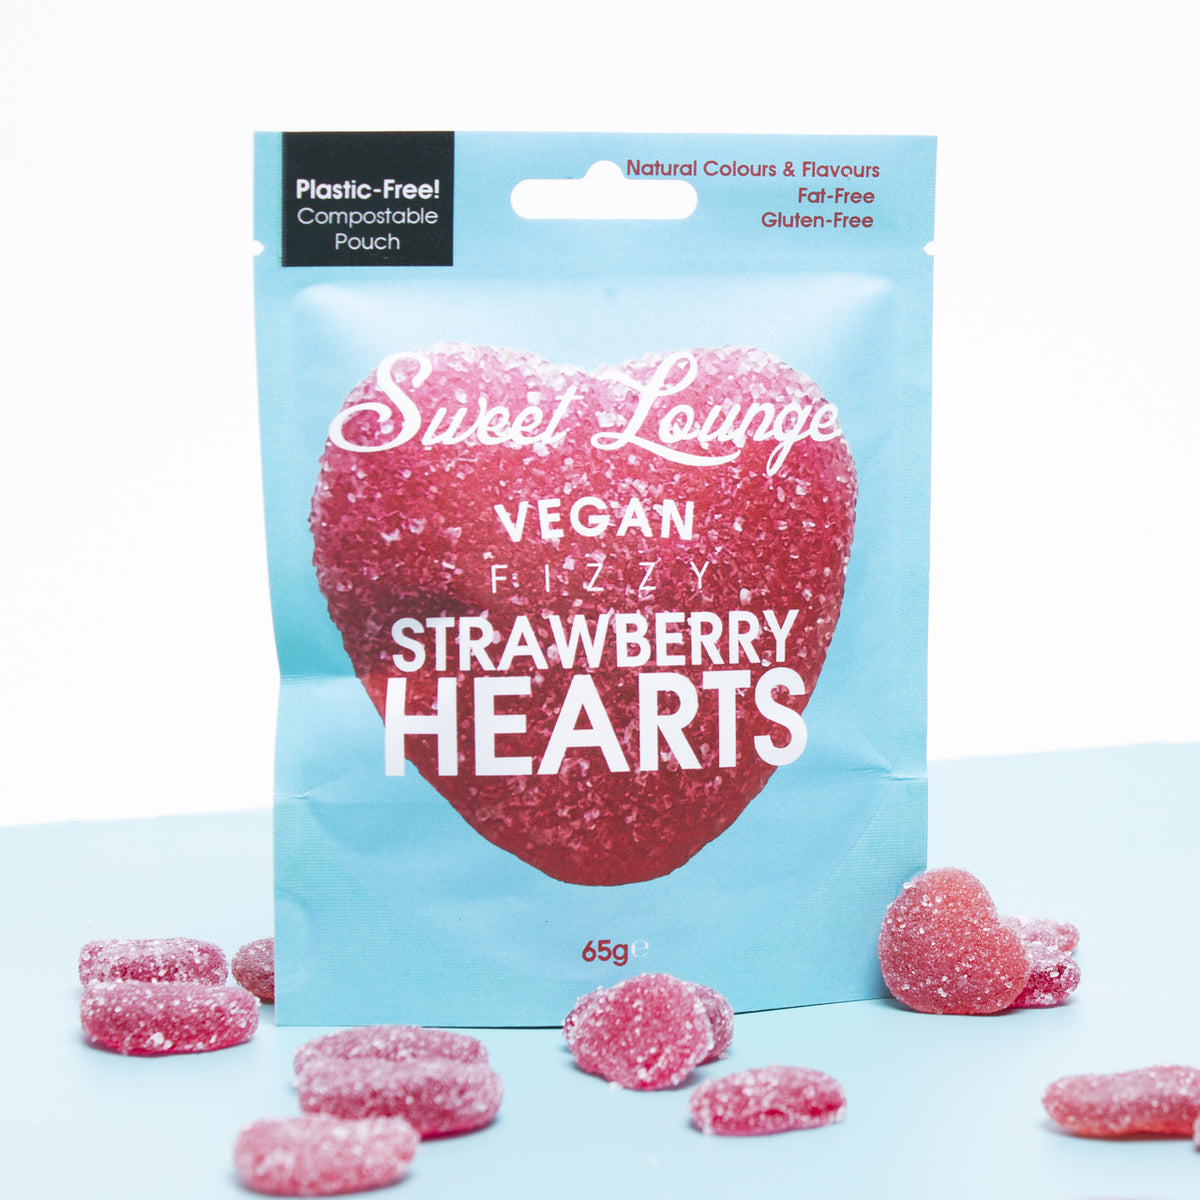 Strawberry Hearts - Vegan Sweets